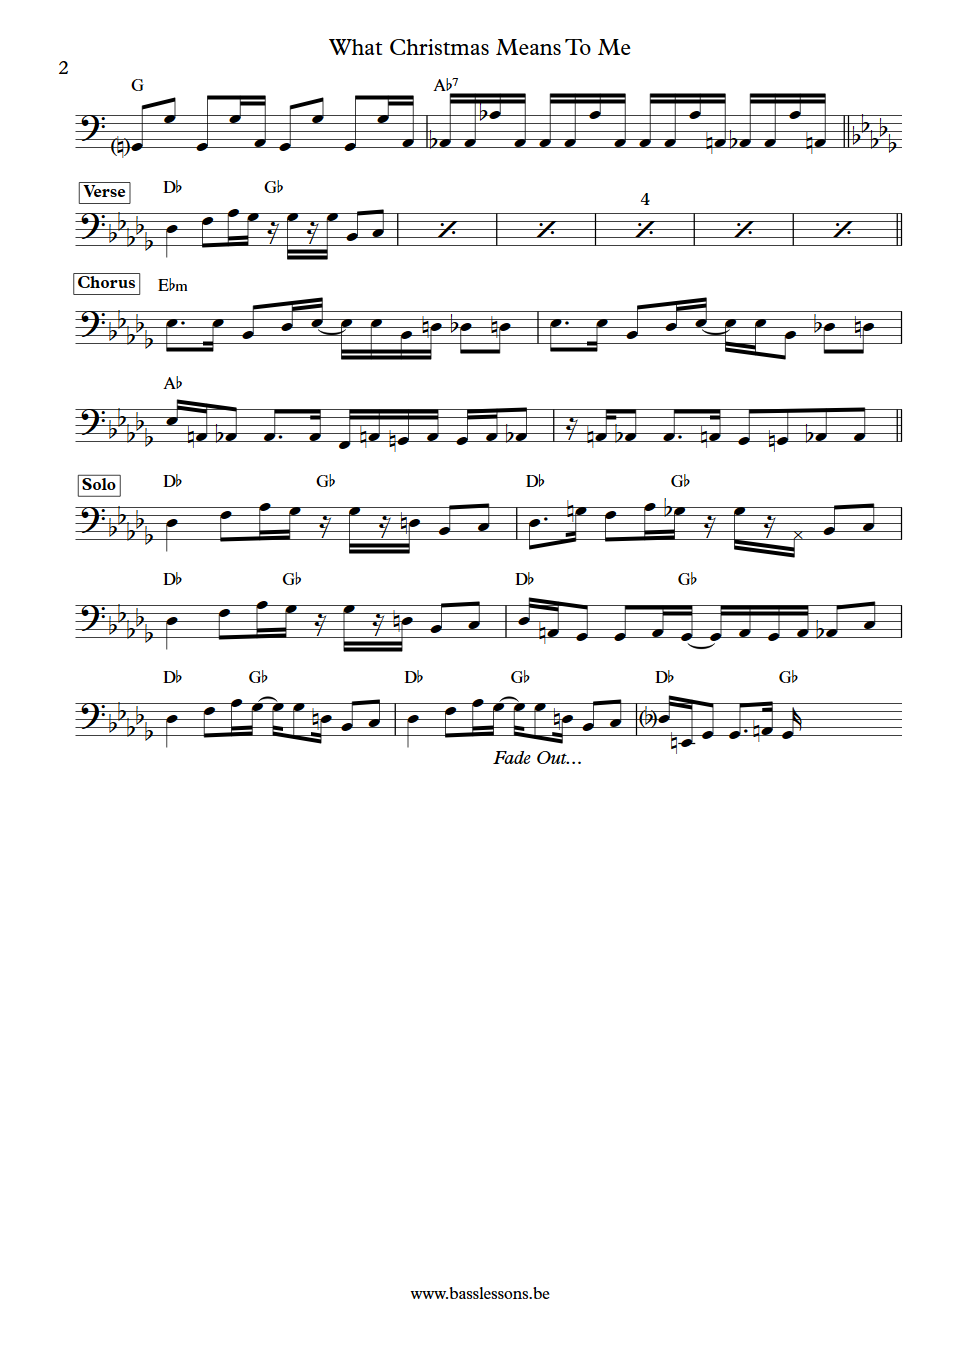 Stevie Wonder What Christmas means to me James Jamerson bass transcription part 2